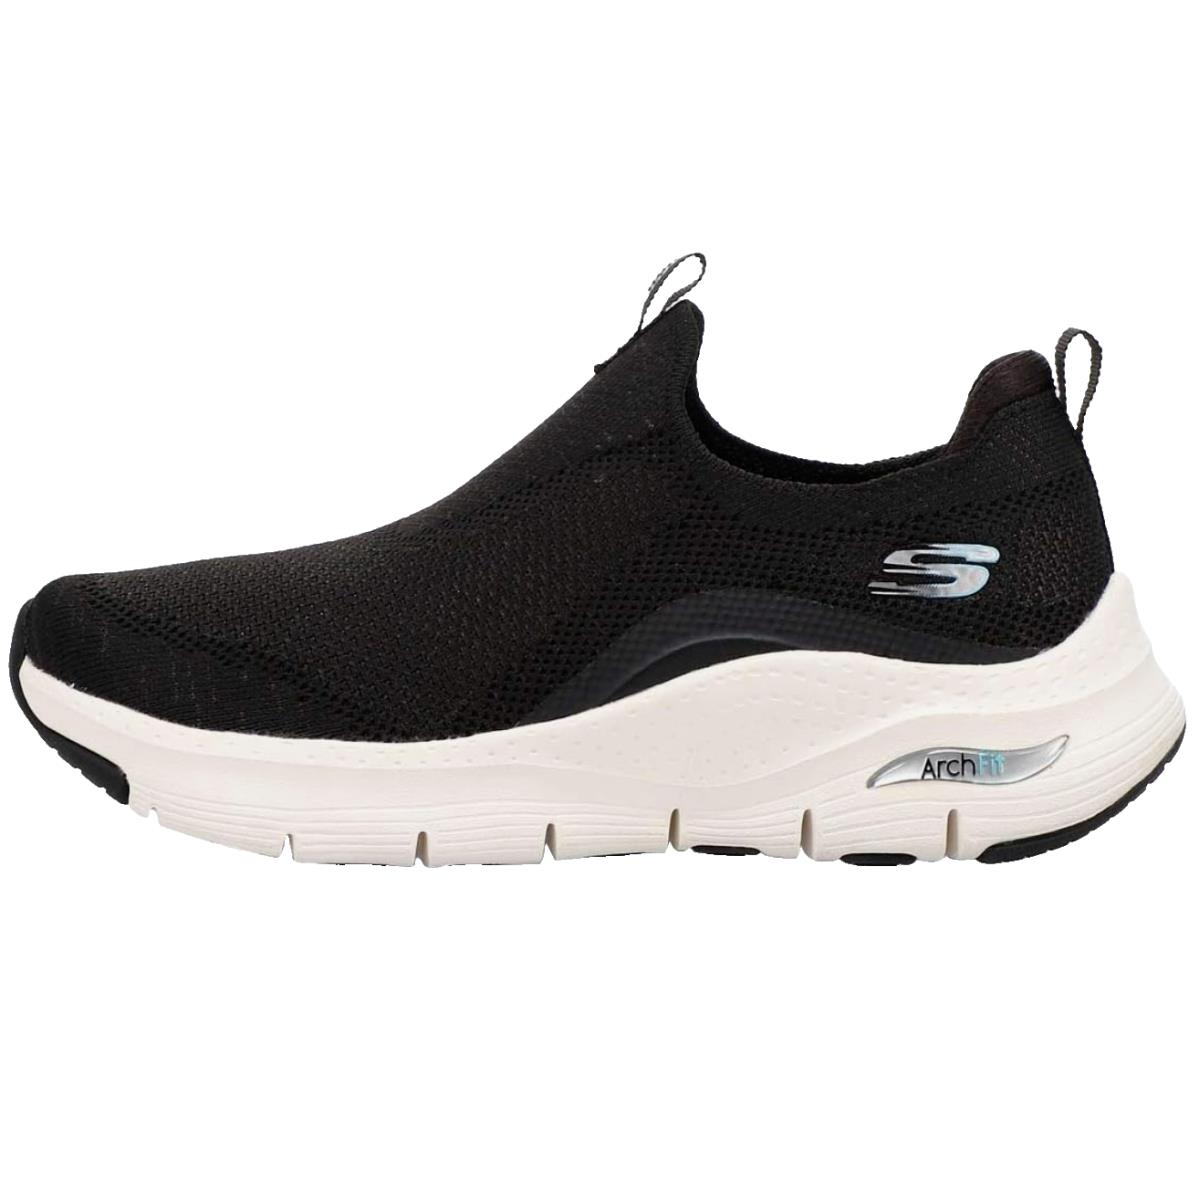 Skechers Women`s Arch Fit Slip-on Sneakers Black/white 10 M